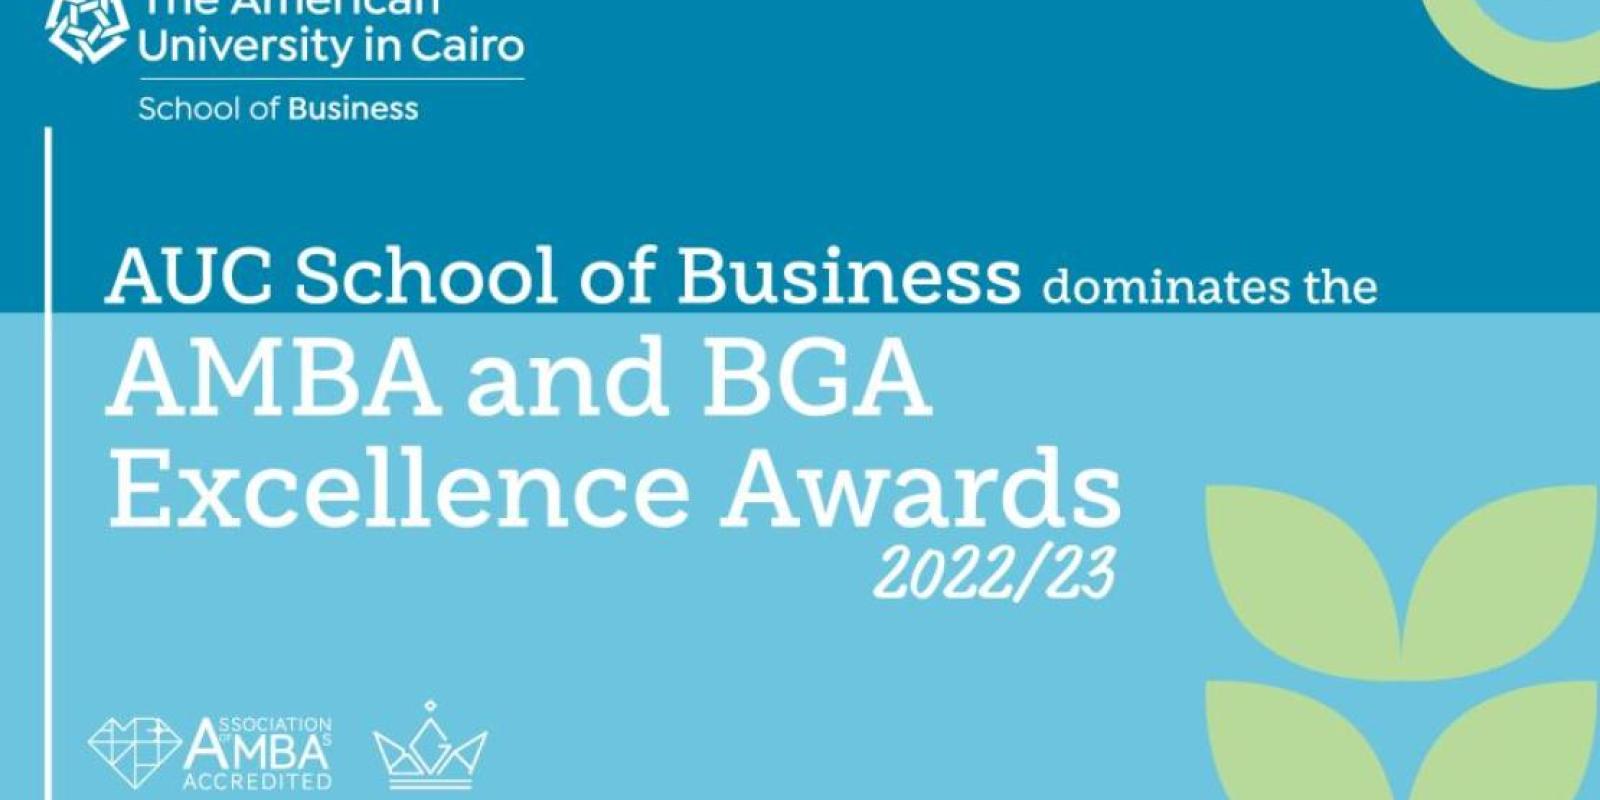 BGA School of Business Award Ceremony